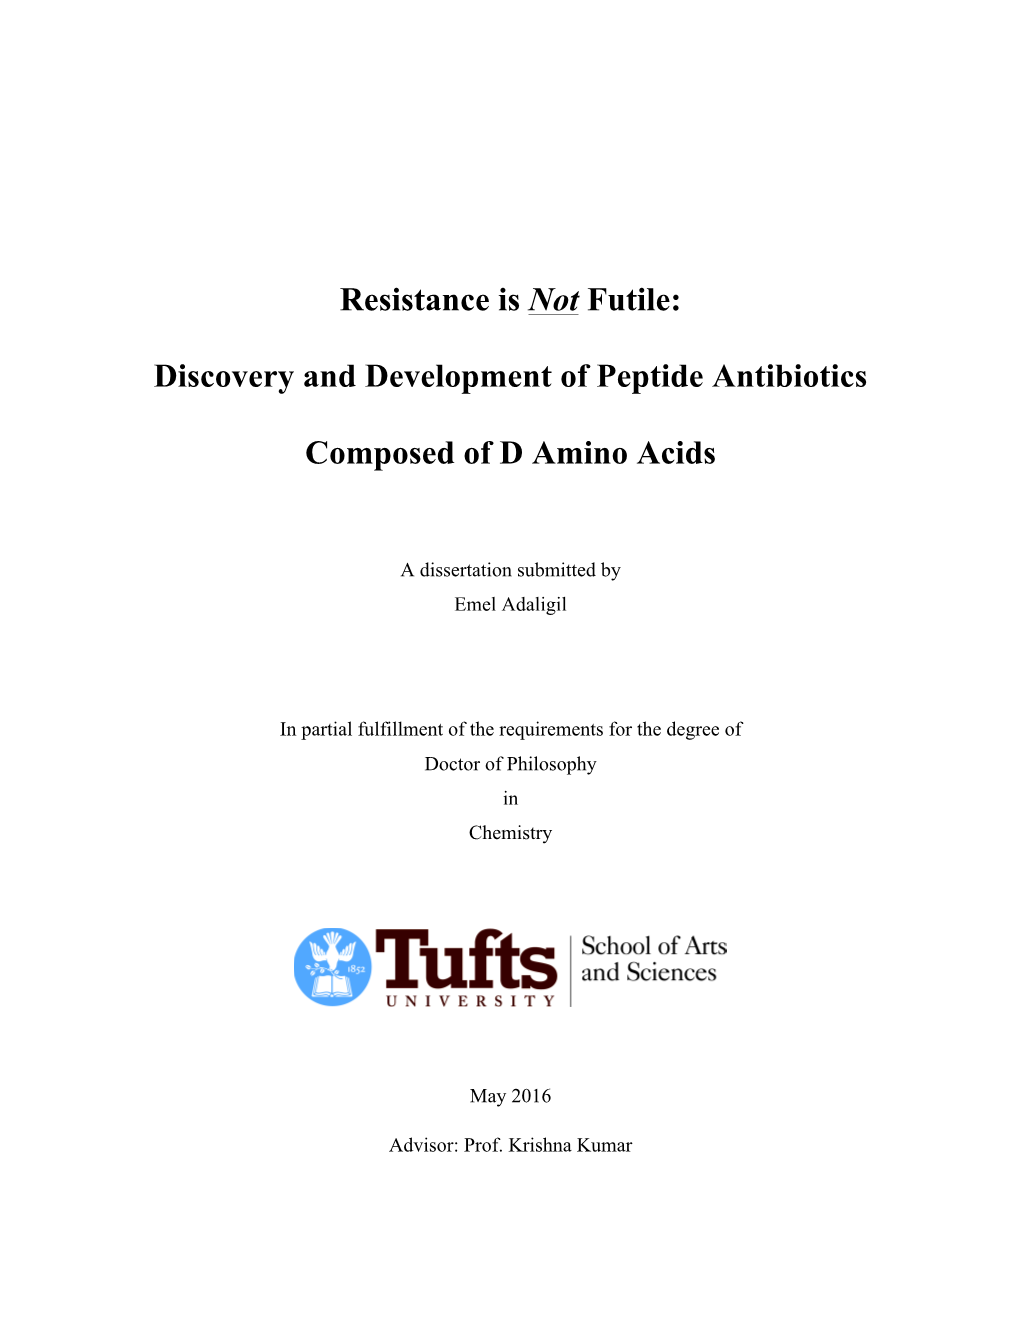 Discovery and Development of Peptide Antibiotics